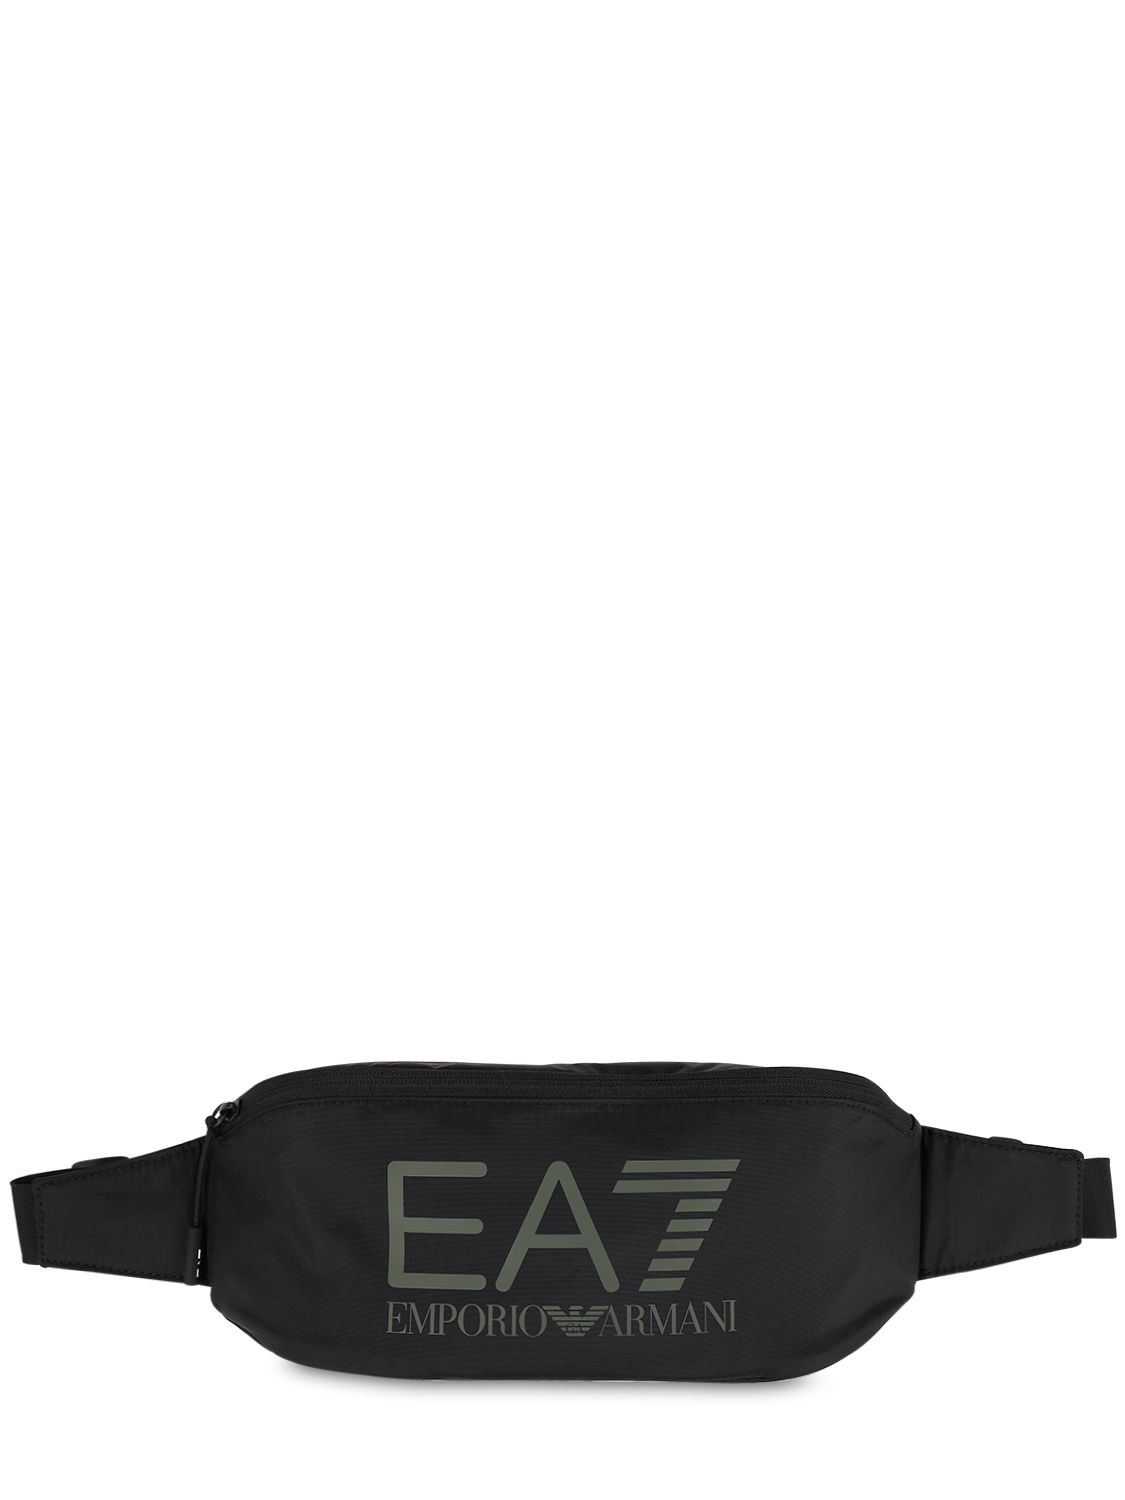 ea7 belt bag